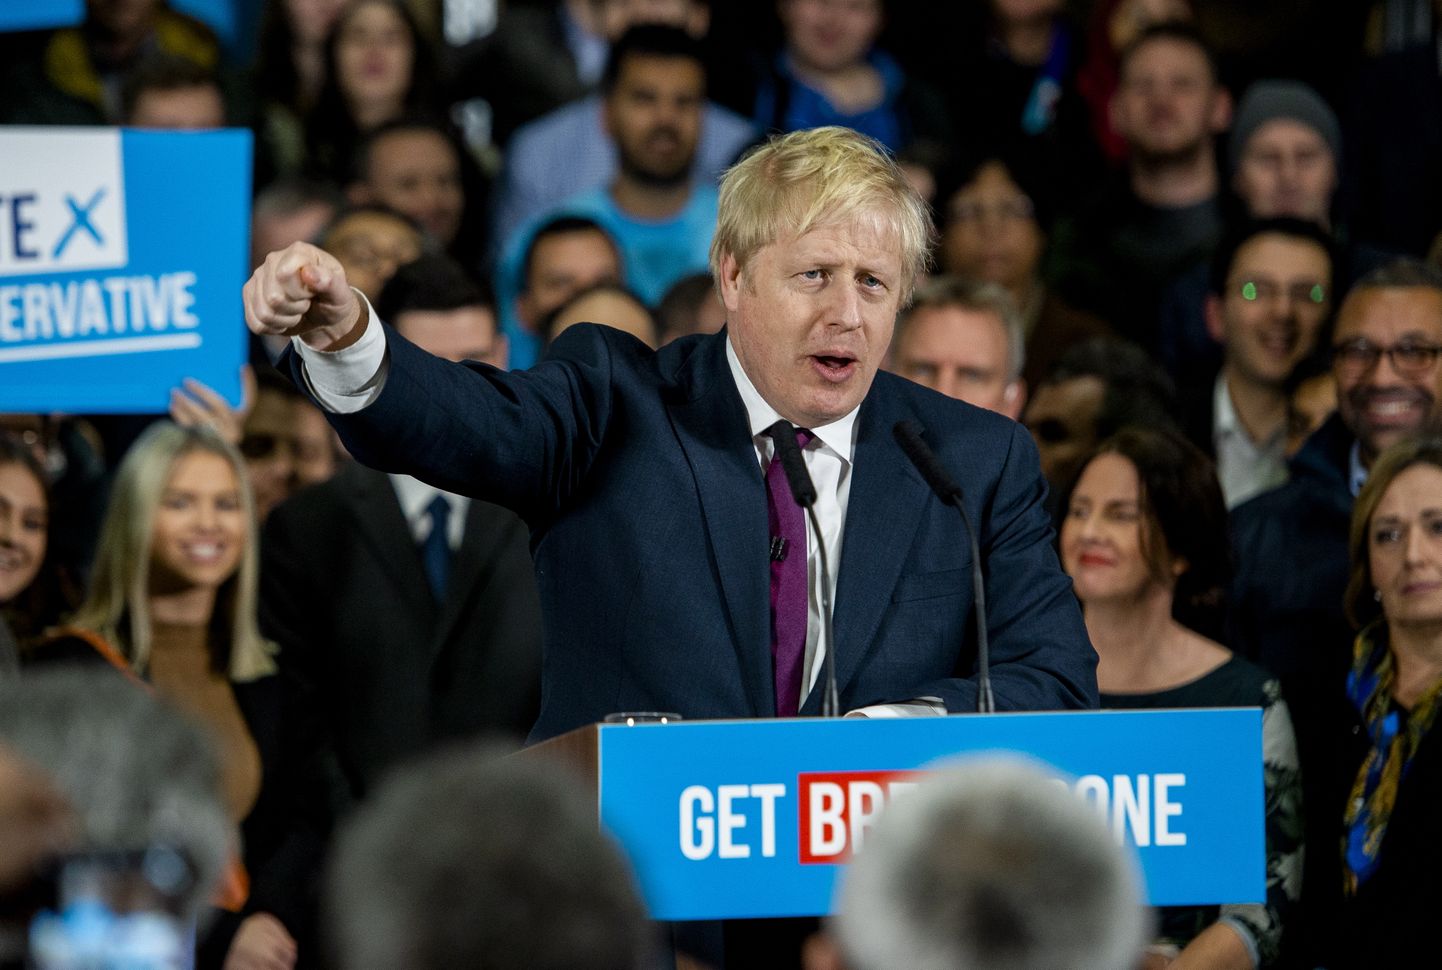 Briti peaminister Boris Johnson 10. detsembril kõnet pidamas.